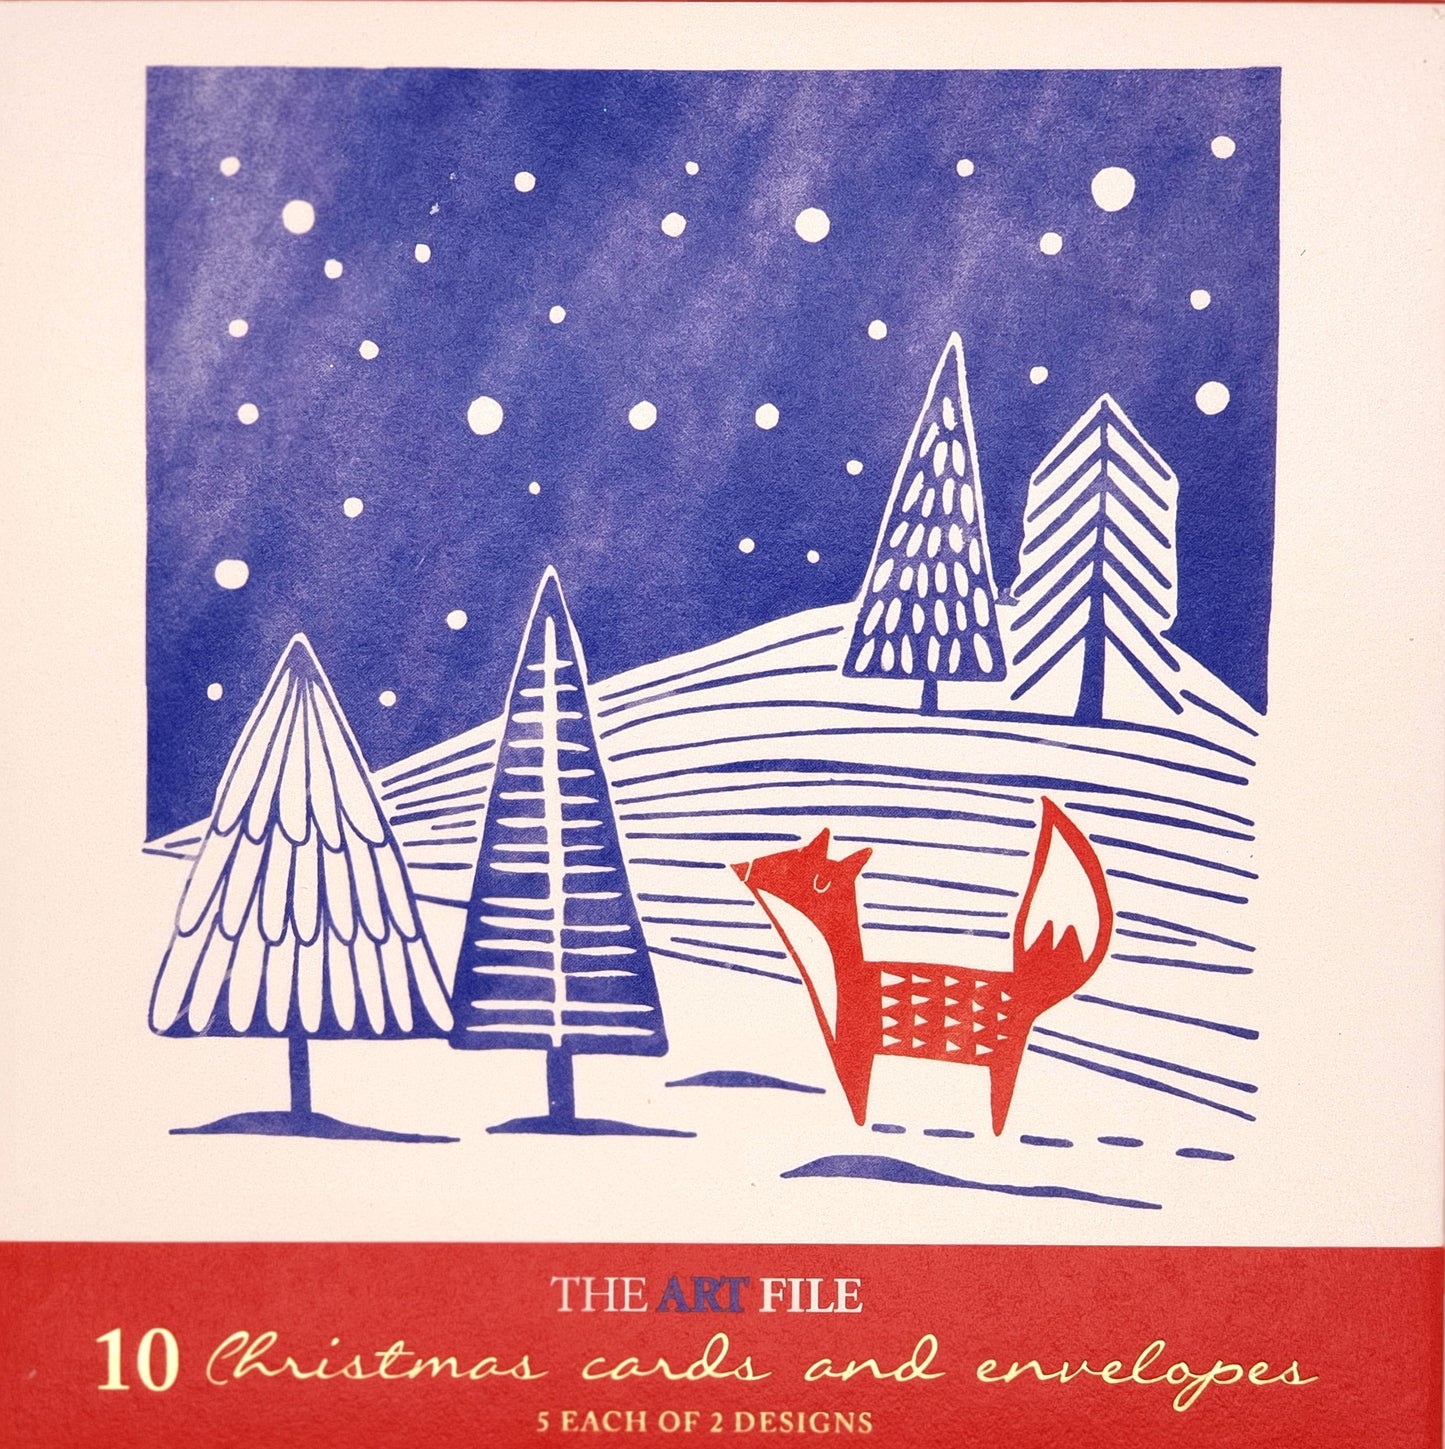 Bears & Fox -  Multi pack of Christmas cards